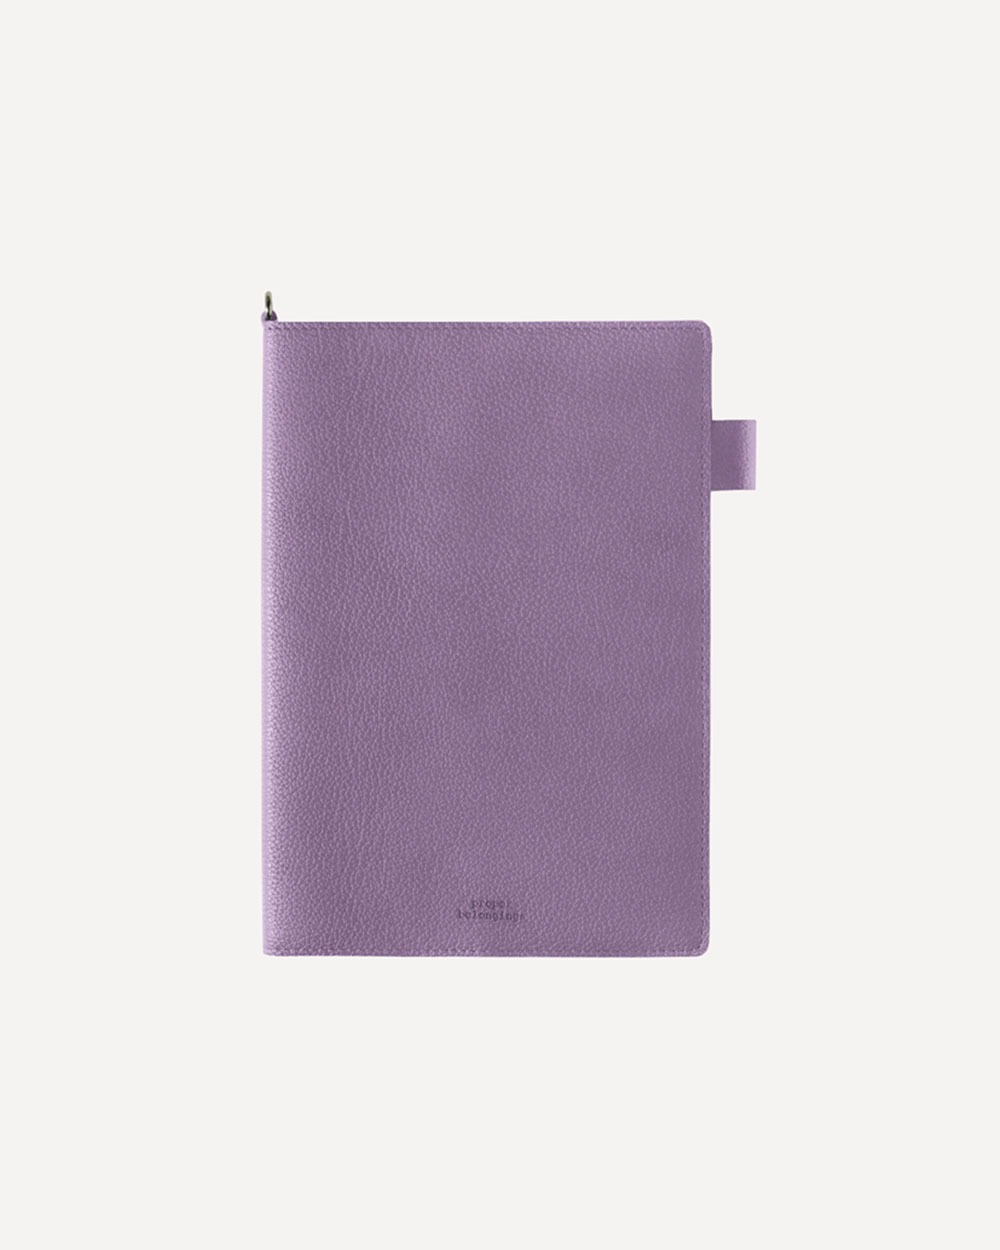 Proper Leather Cover (B6) / Lavender